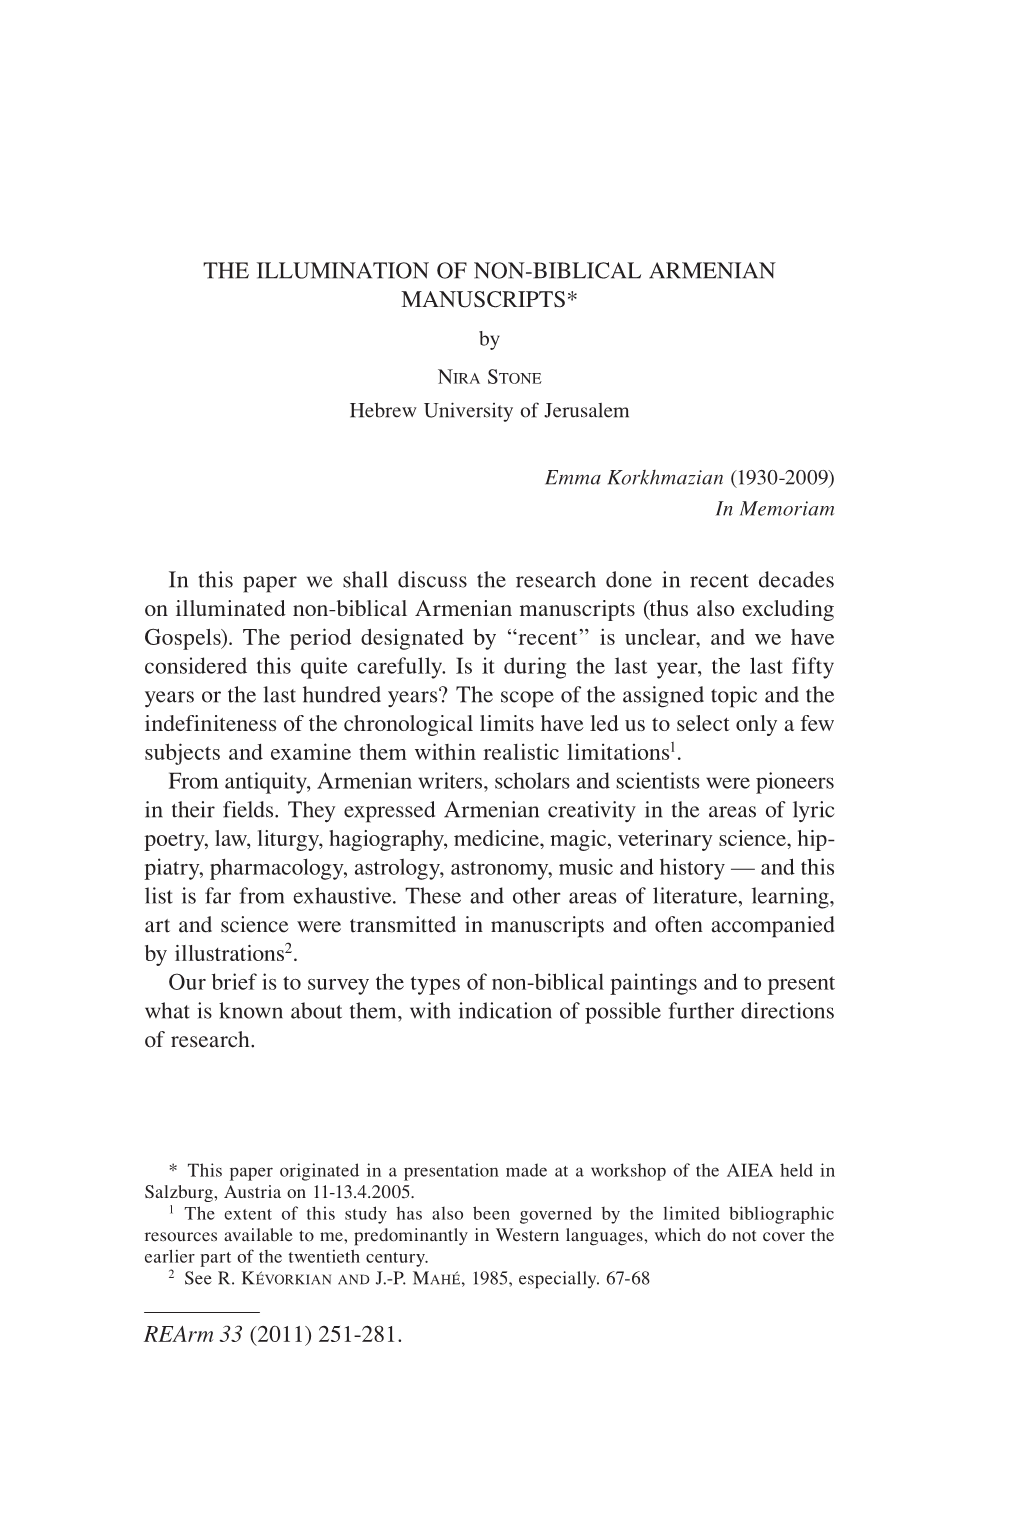 THE ILLUMINATION of NON-BIBLICAL ARMENIAN MANUSCRIPTS* By